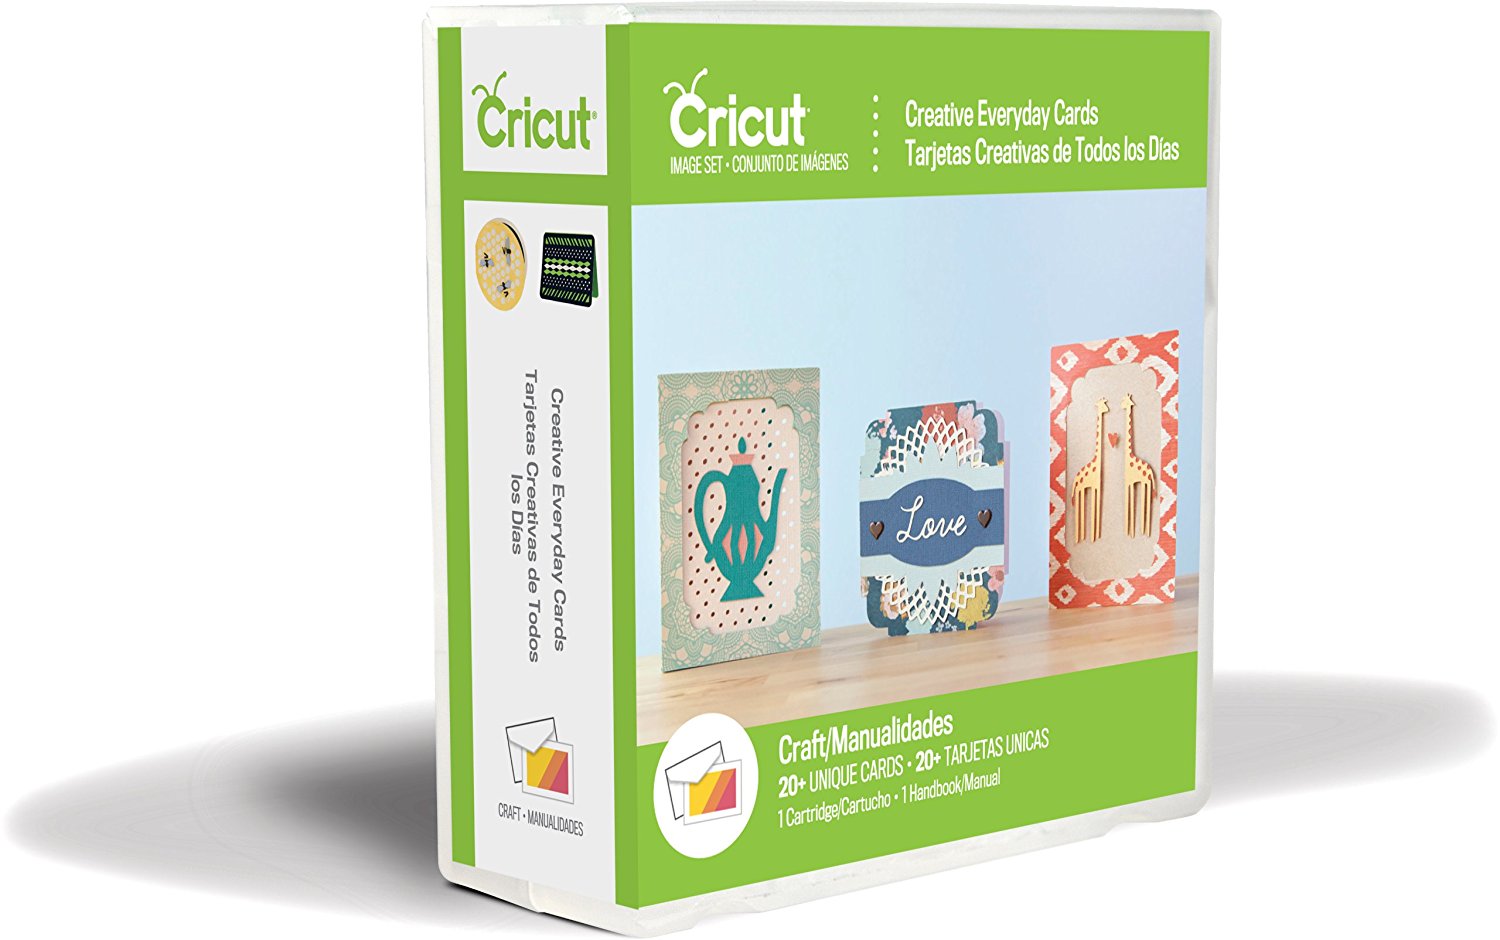 Cricut Cartridge: Creative Everyday Cards